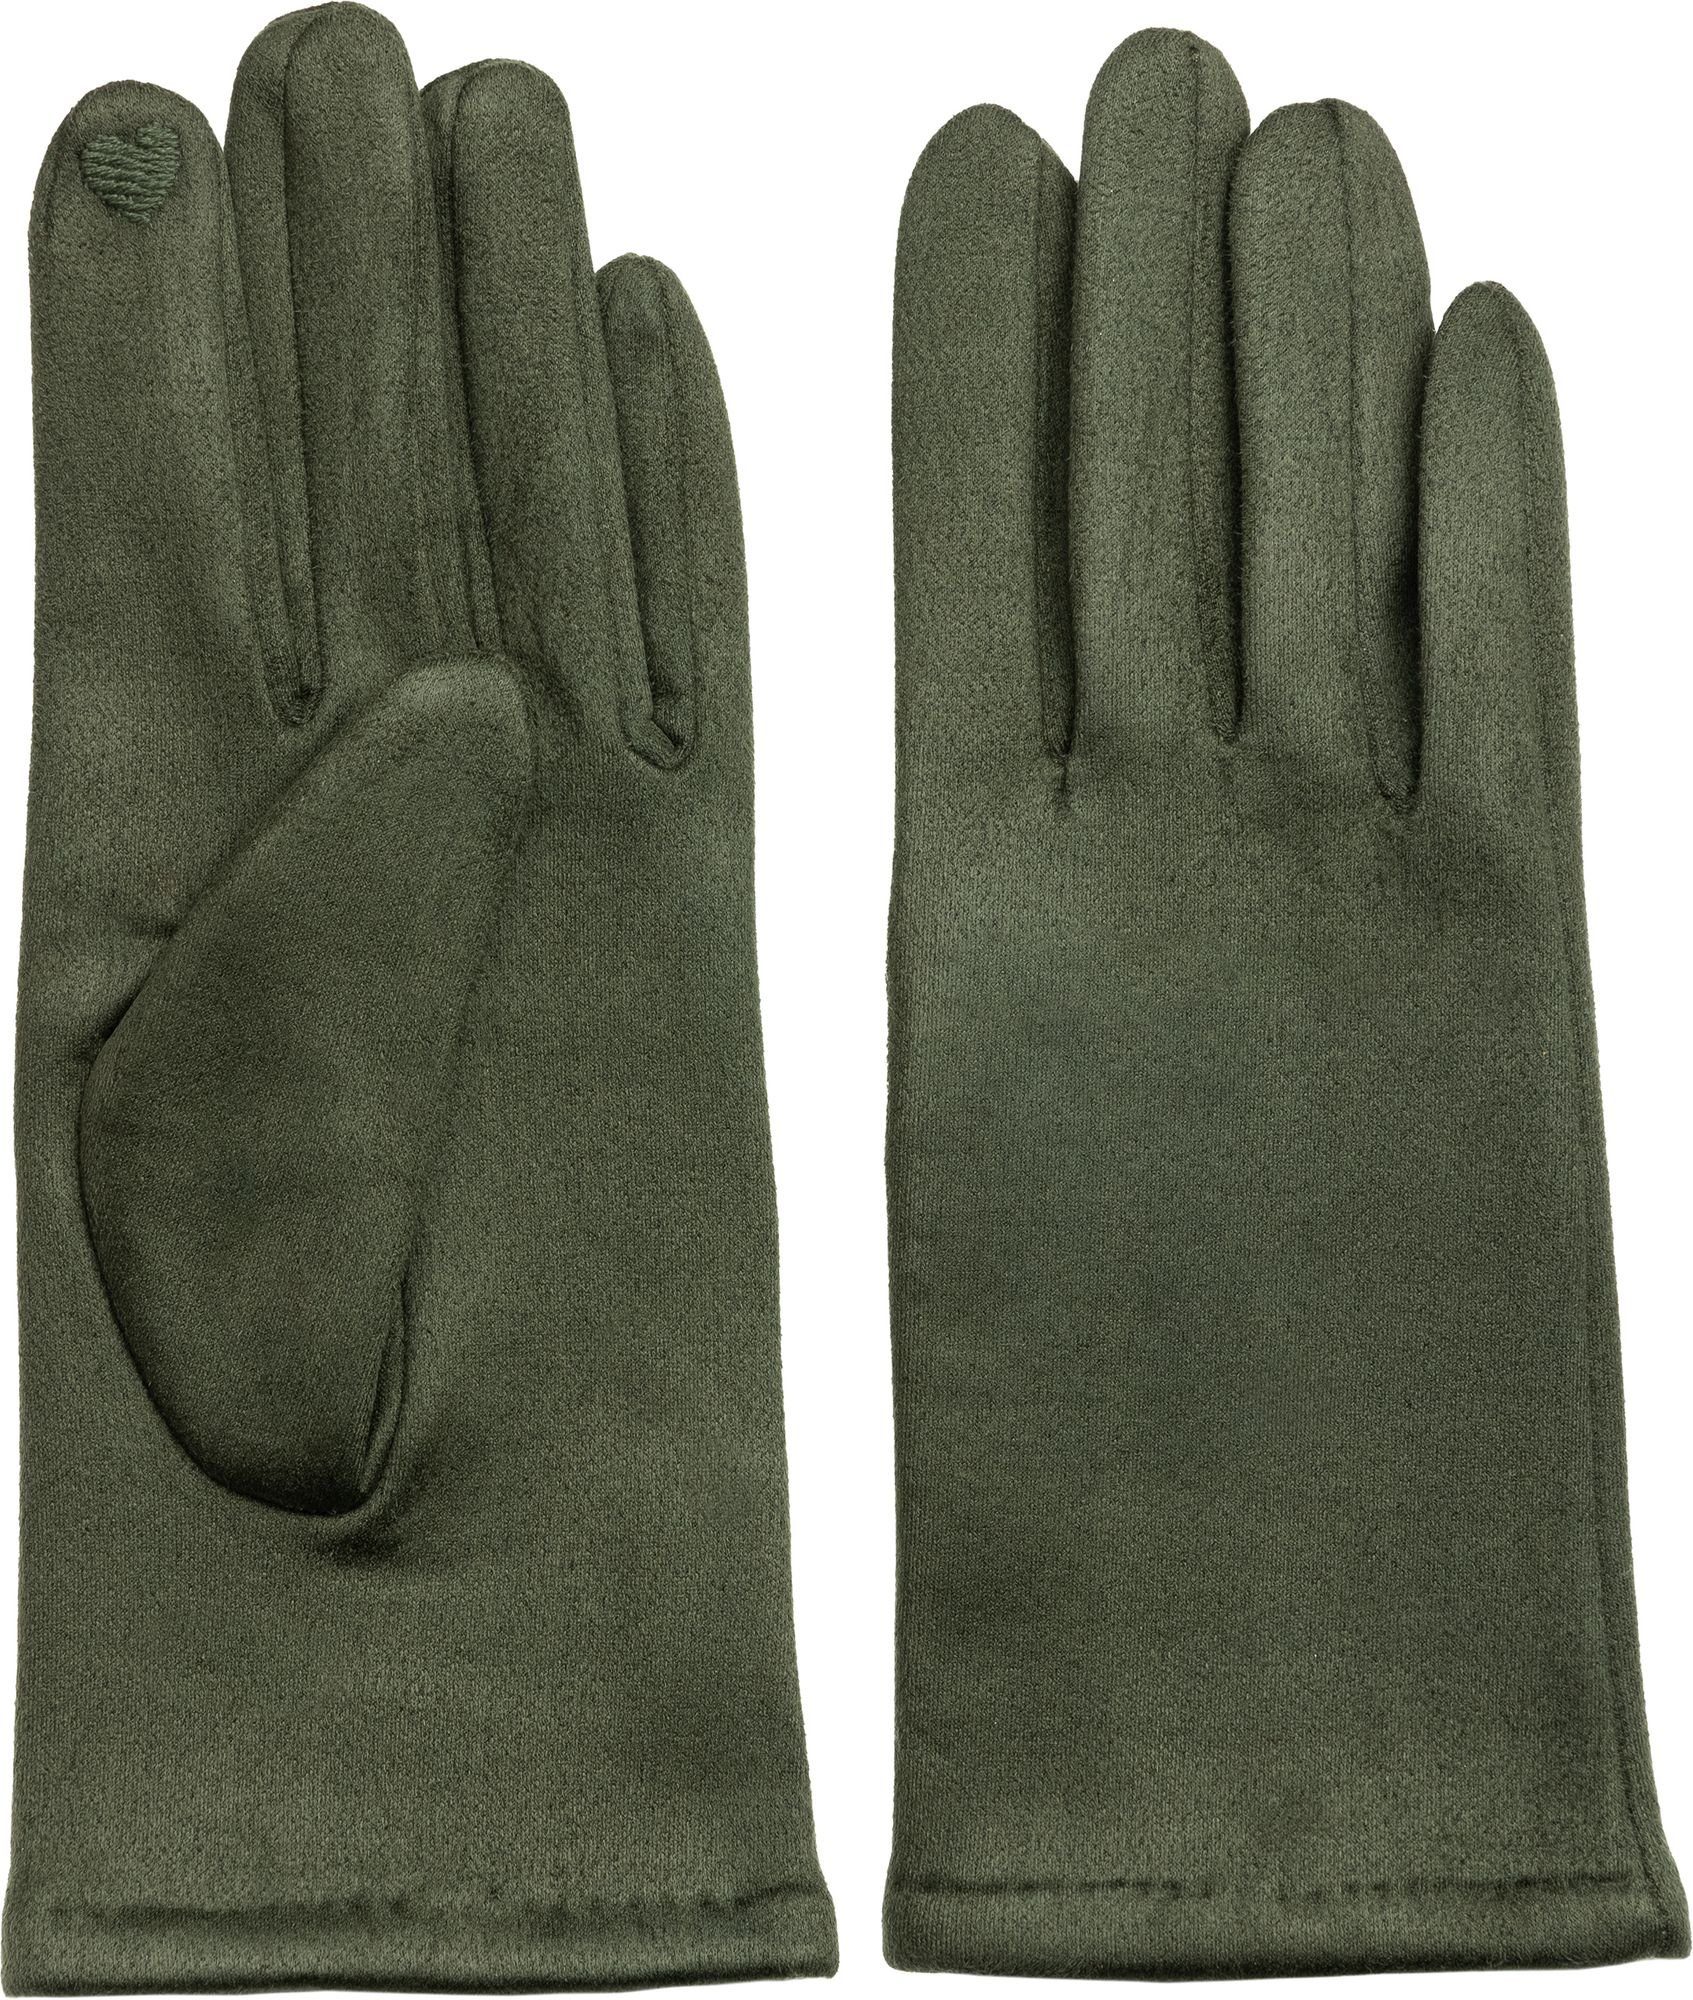 Winter oliv GLV013 Handschuhe Caspar uni elegante grün Strickhandschuhe klassisch Damen